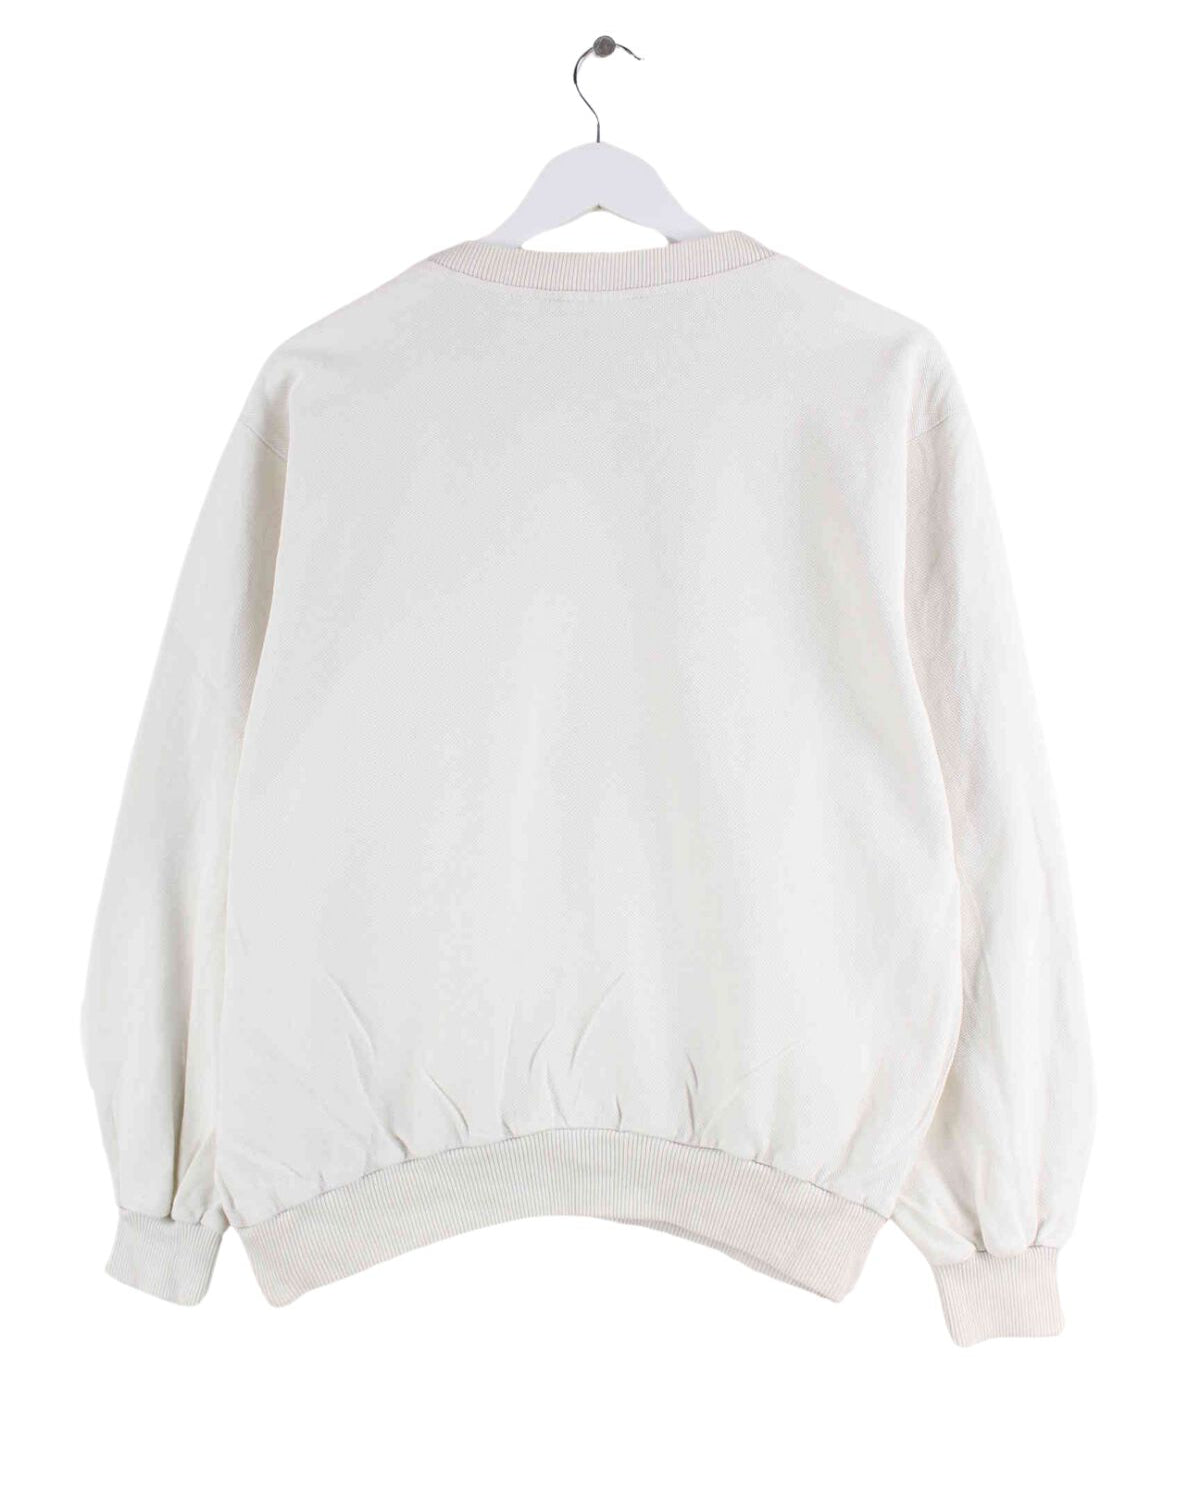 Lacoste 90s Vintage Basic Sweater Beige XS (back image)